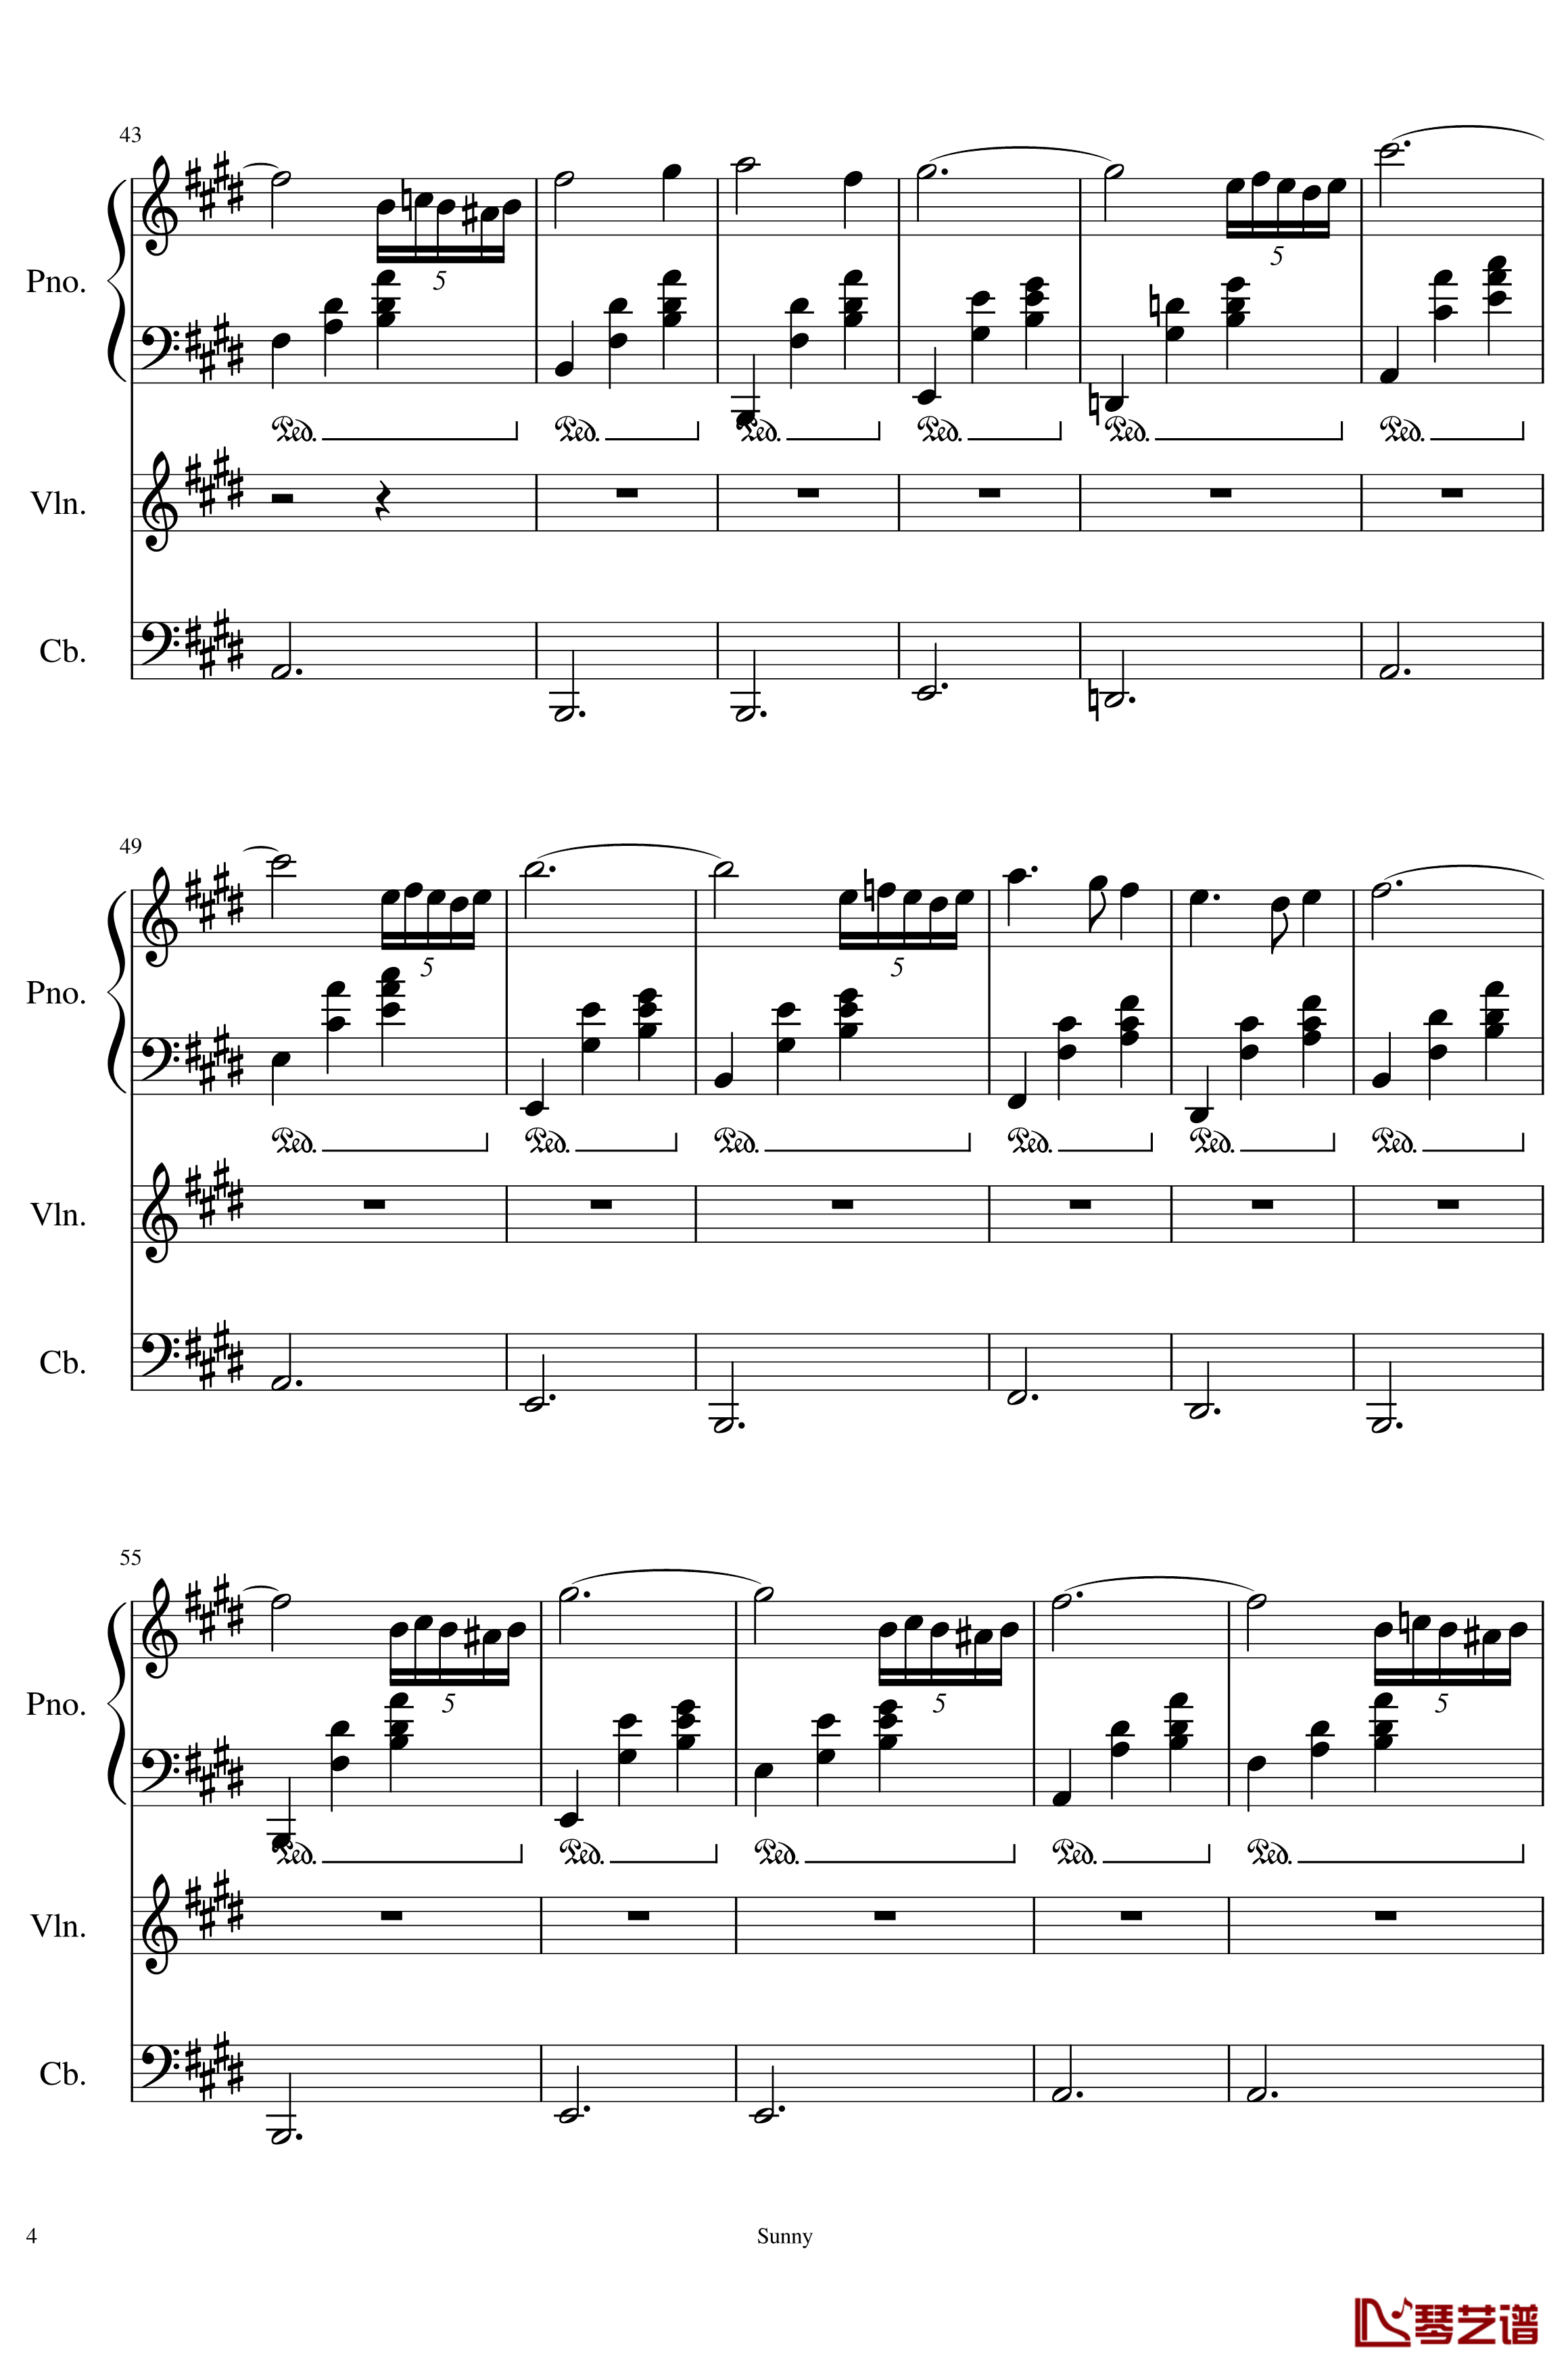 Op.1-2 钢琴谱-最苦与最乐-SunnyAK474